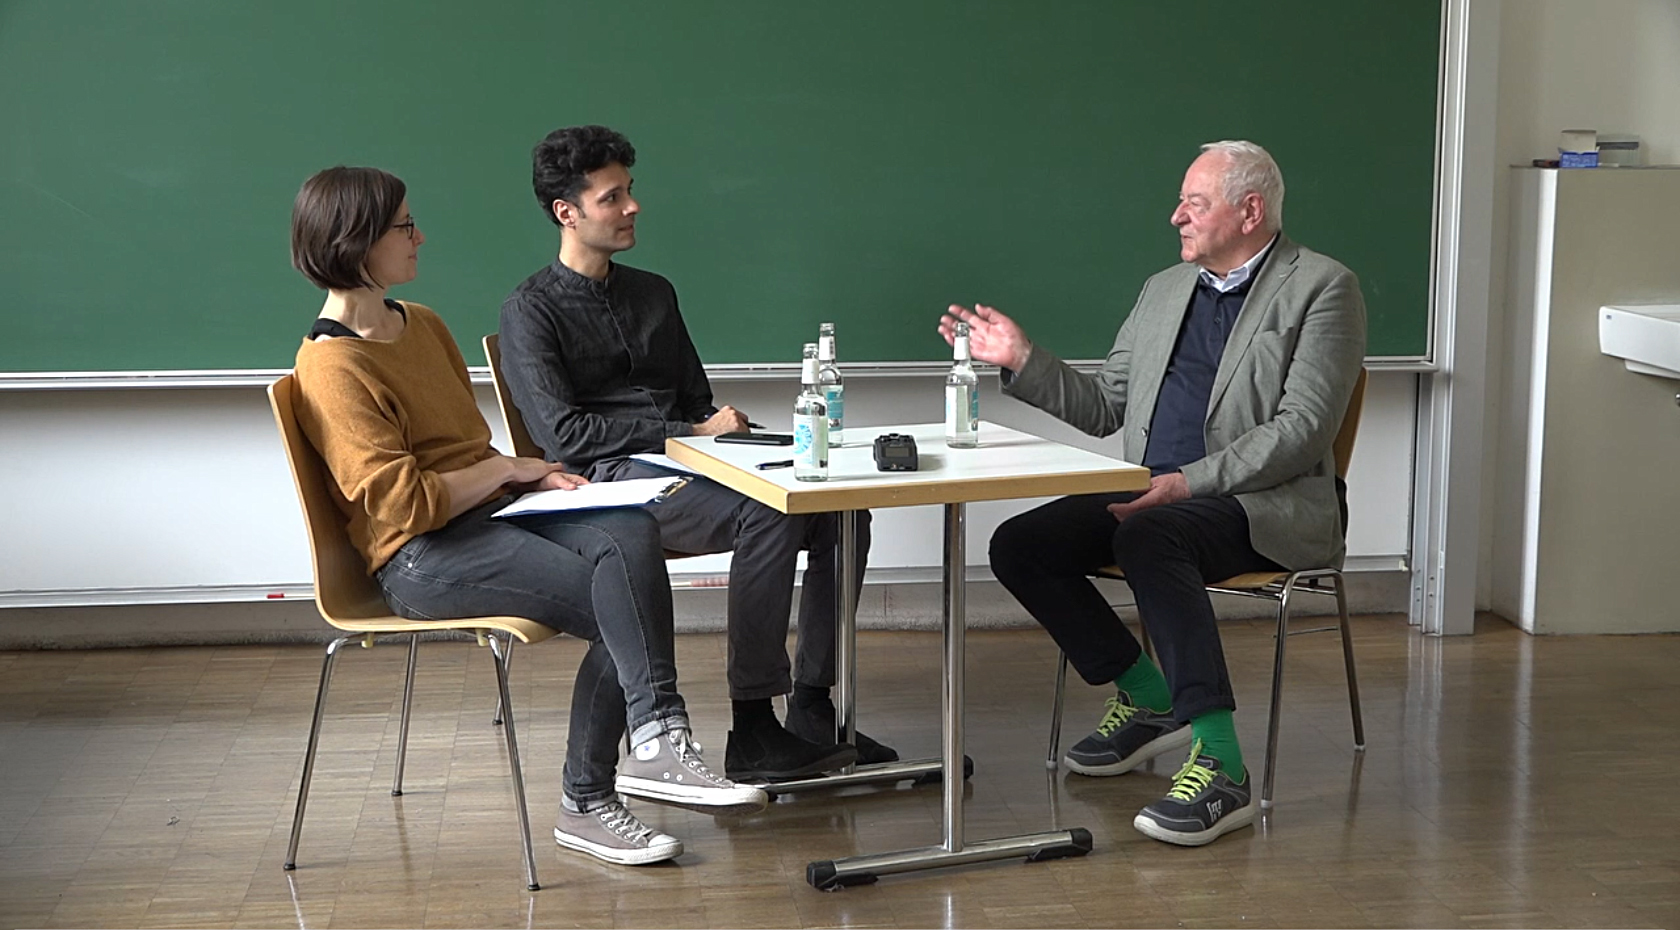 Interview with Erich Gantzert-Castrillo, 3 persons sitting at a desk